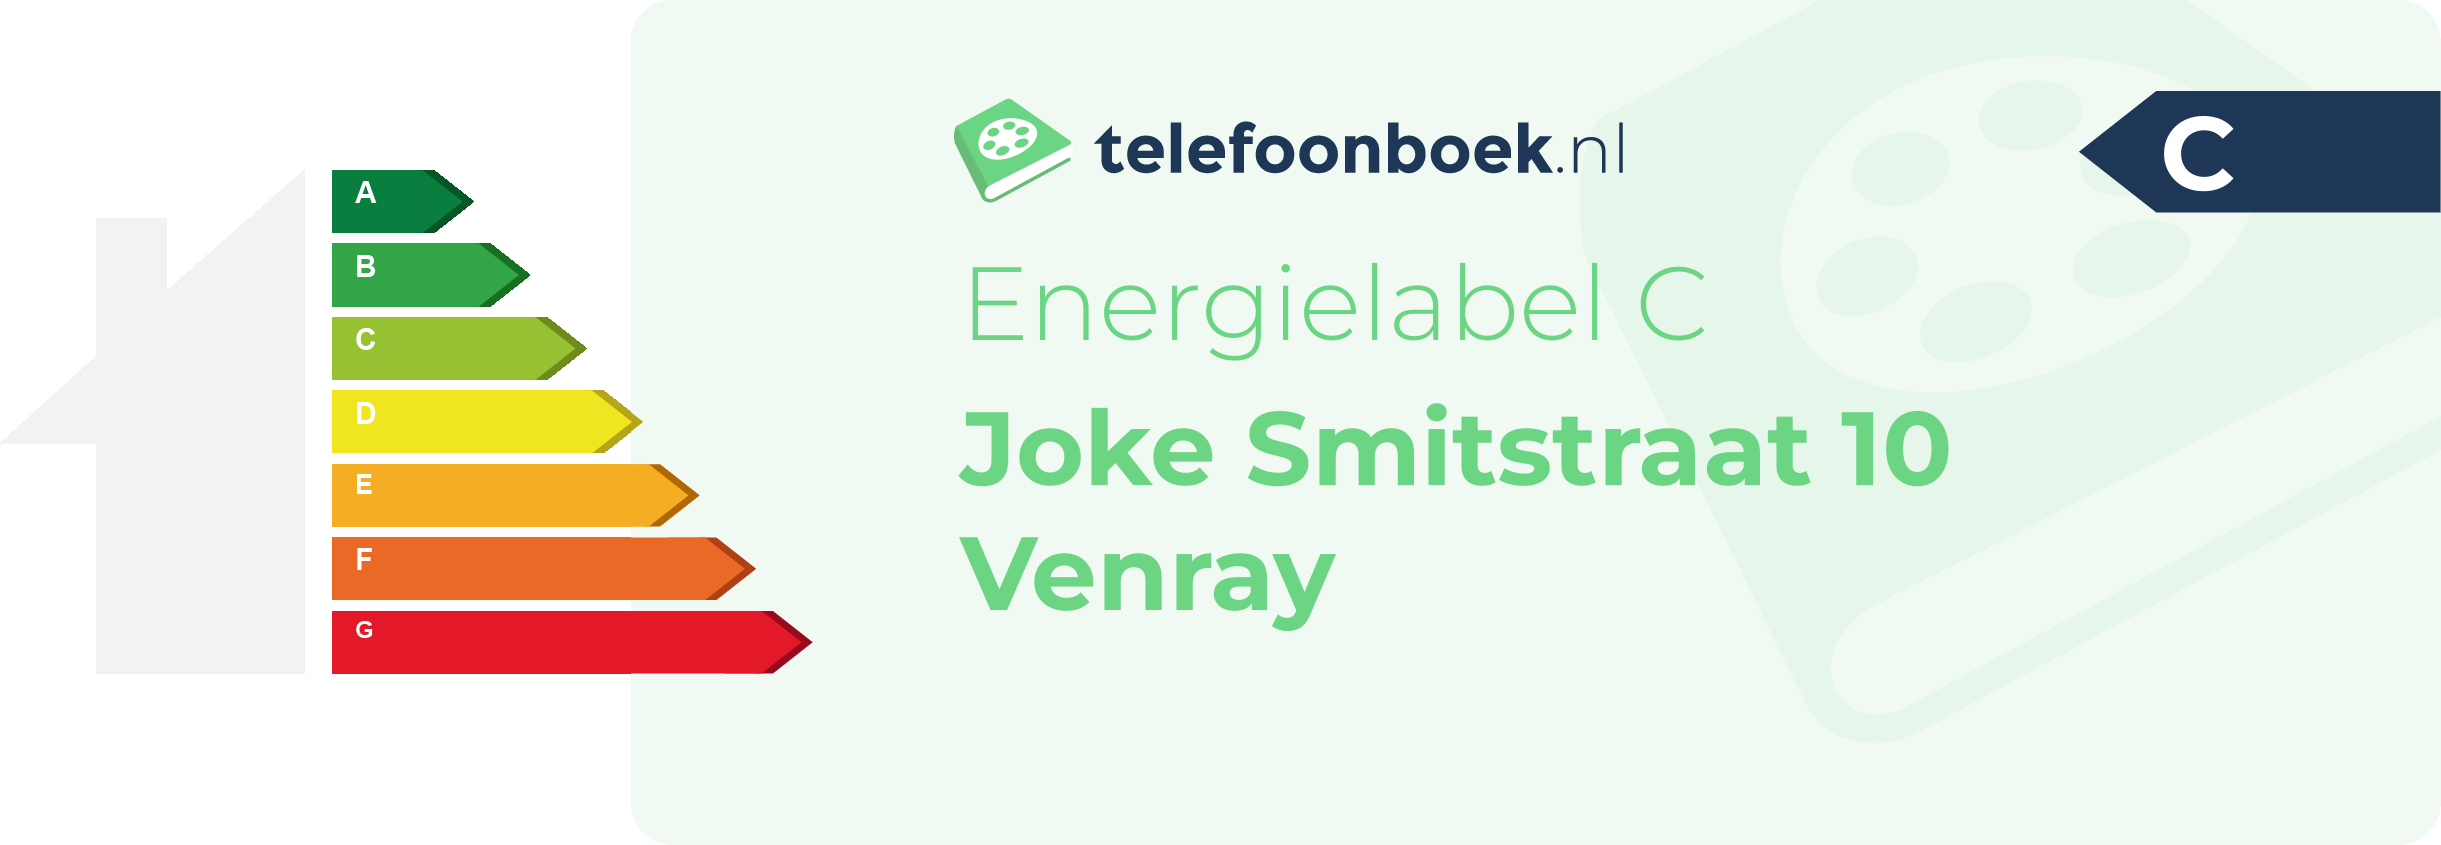 Energielabel Joke Smitstraat 10 Venray